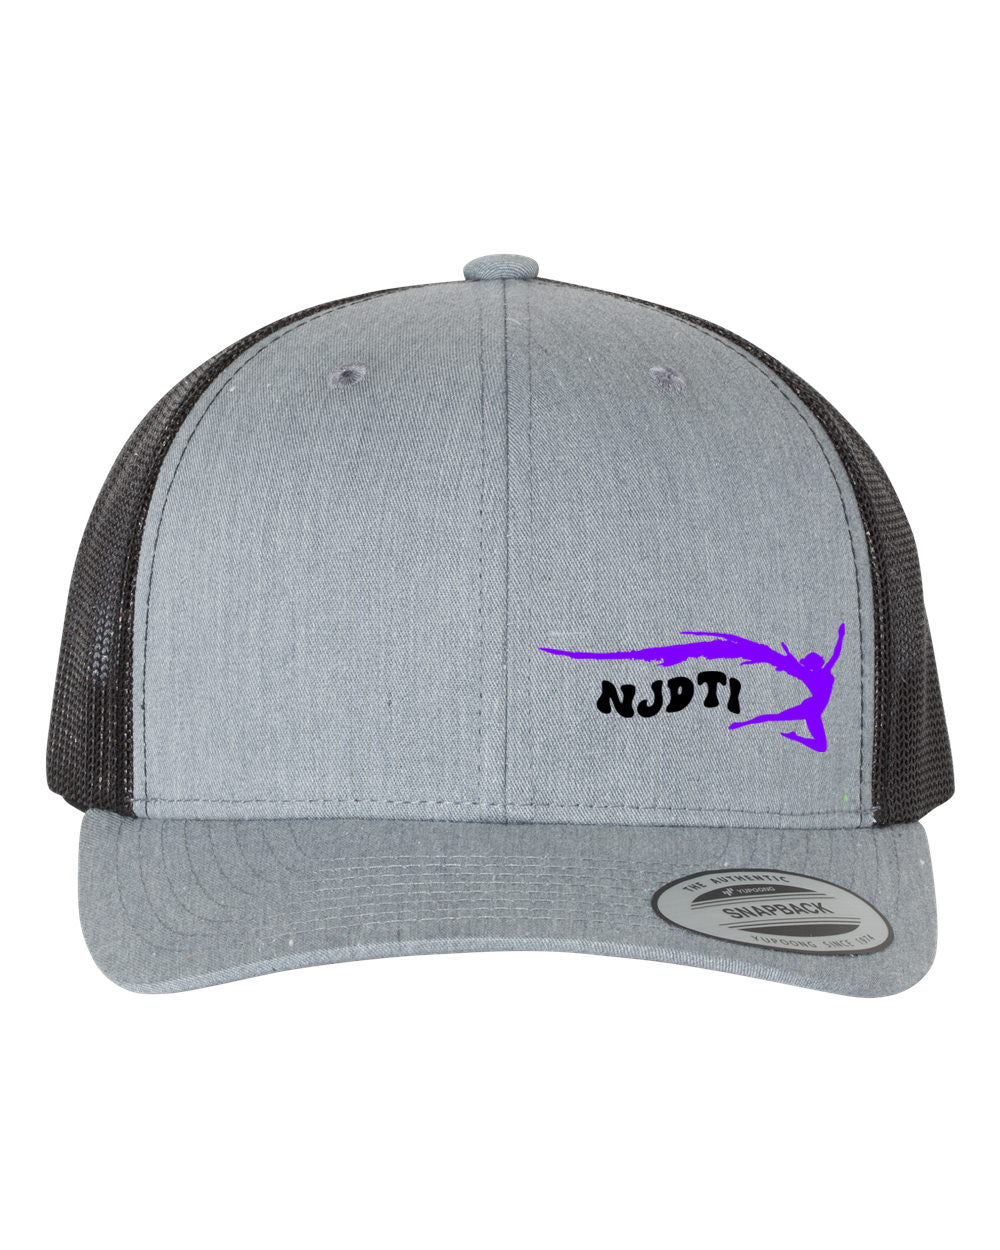 NJ Dance Design 12 Trucker Hat